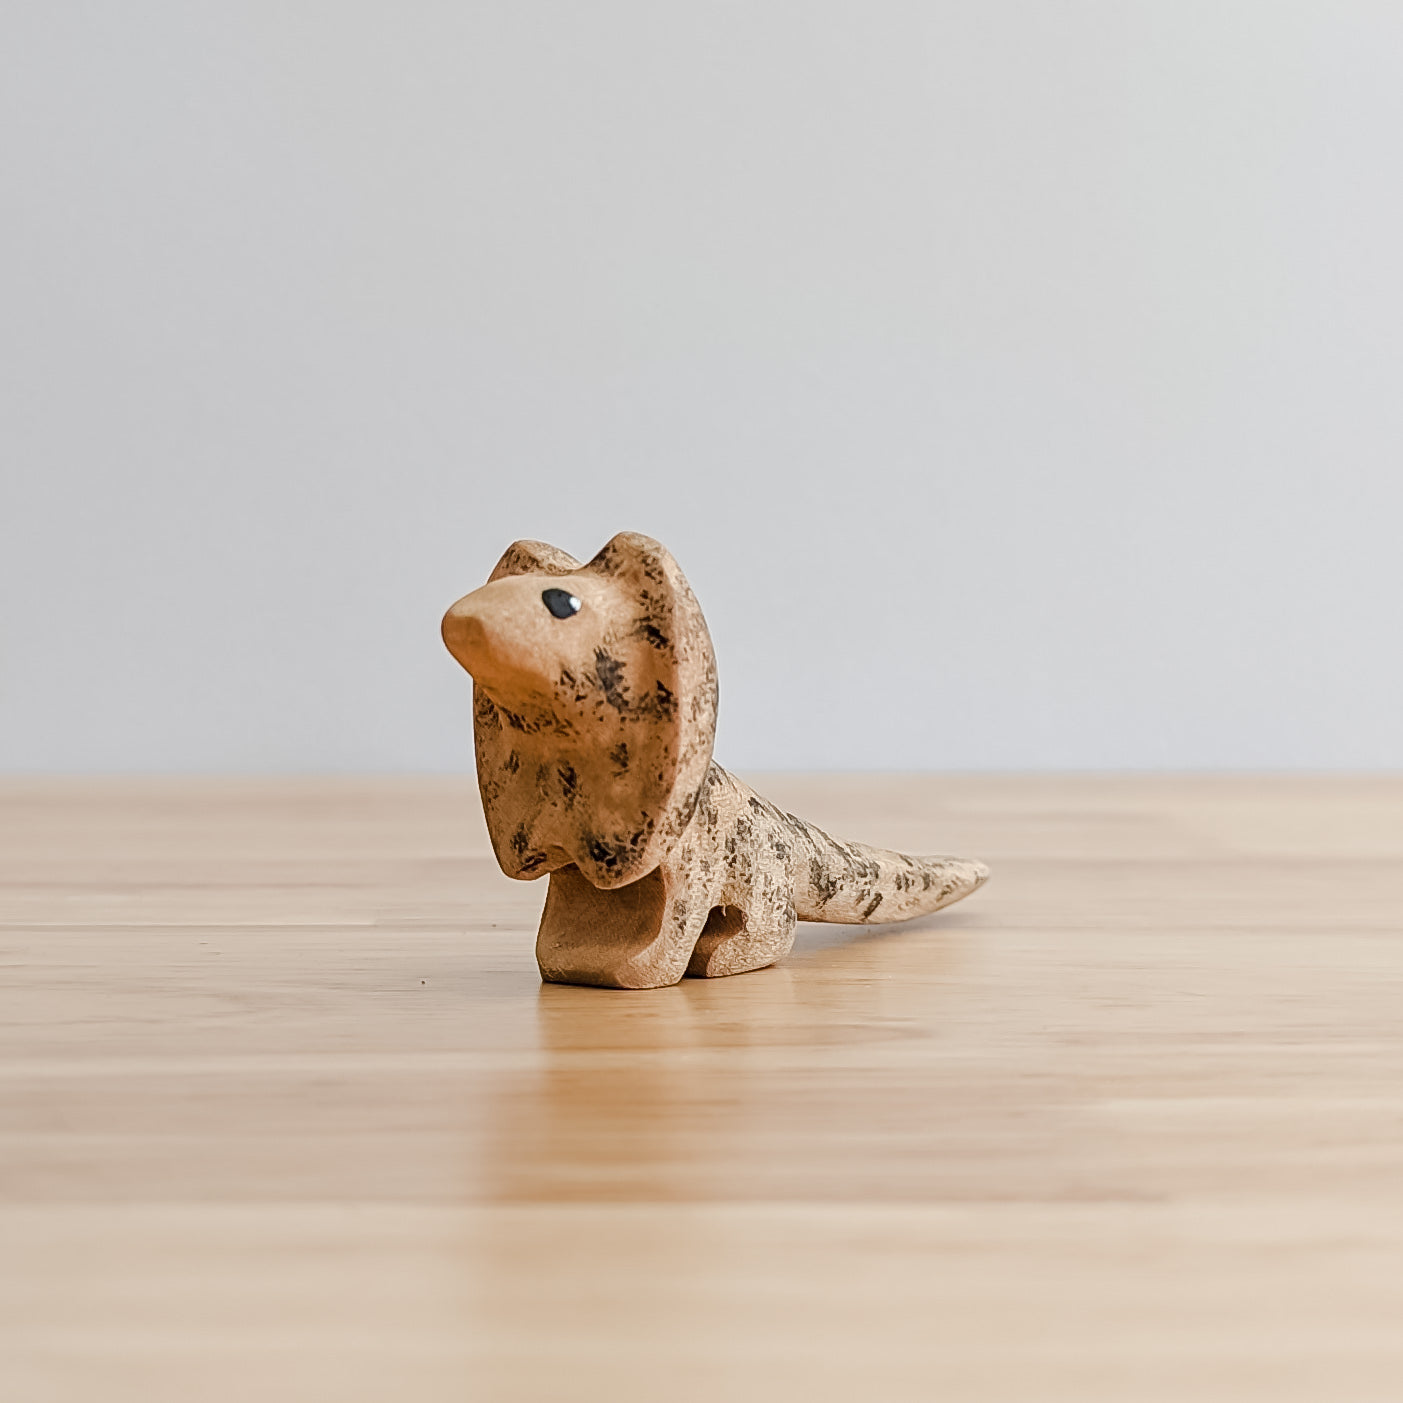 Frill Neck Lizard Wooden Toy